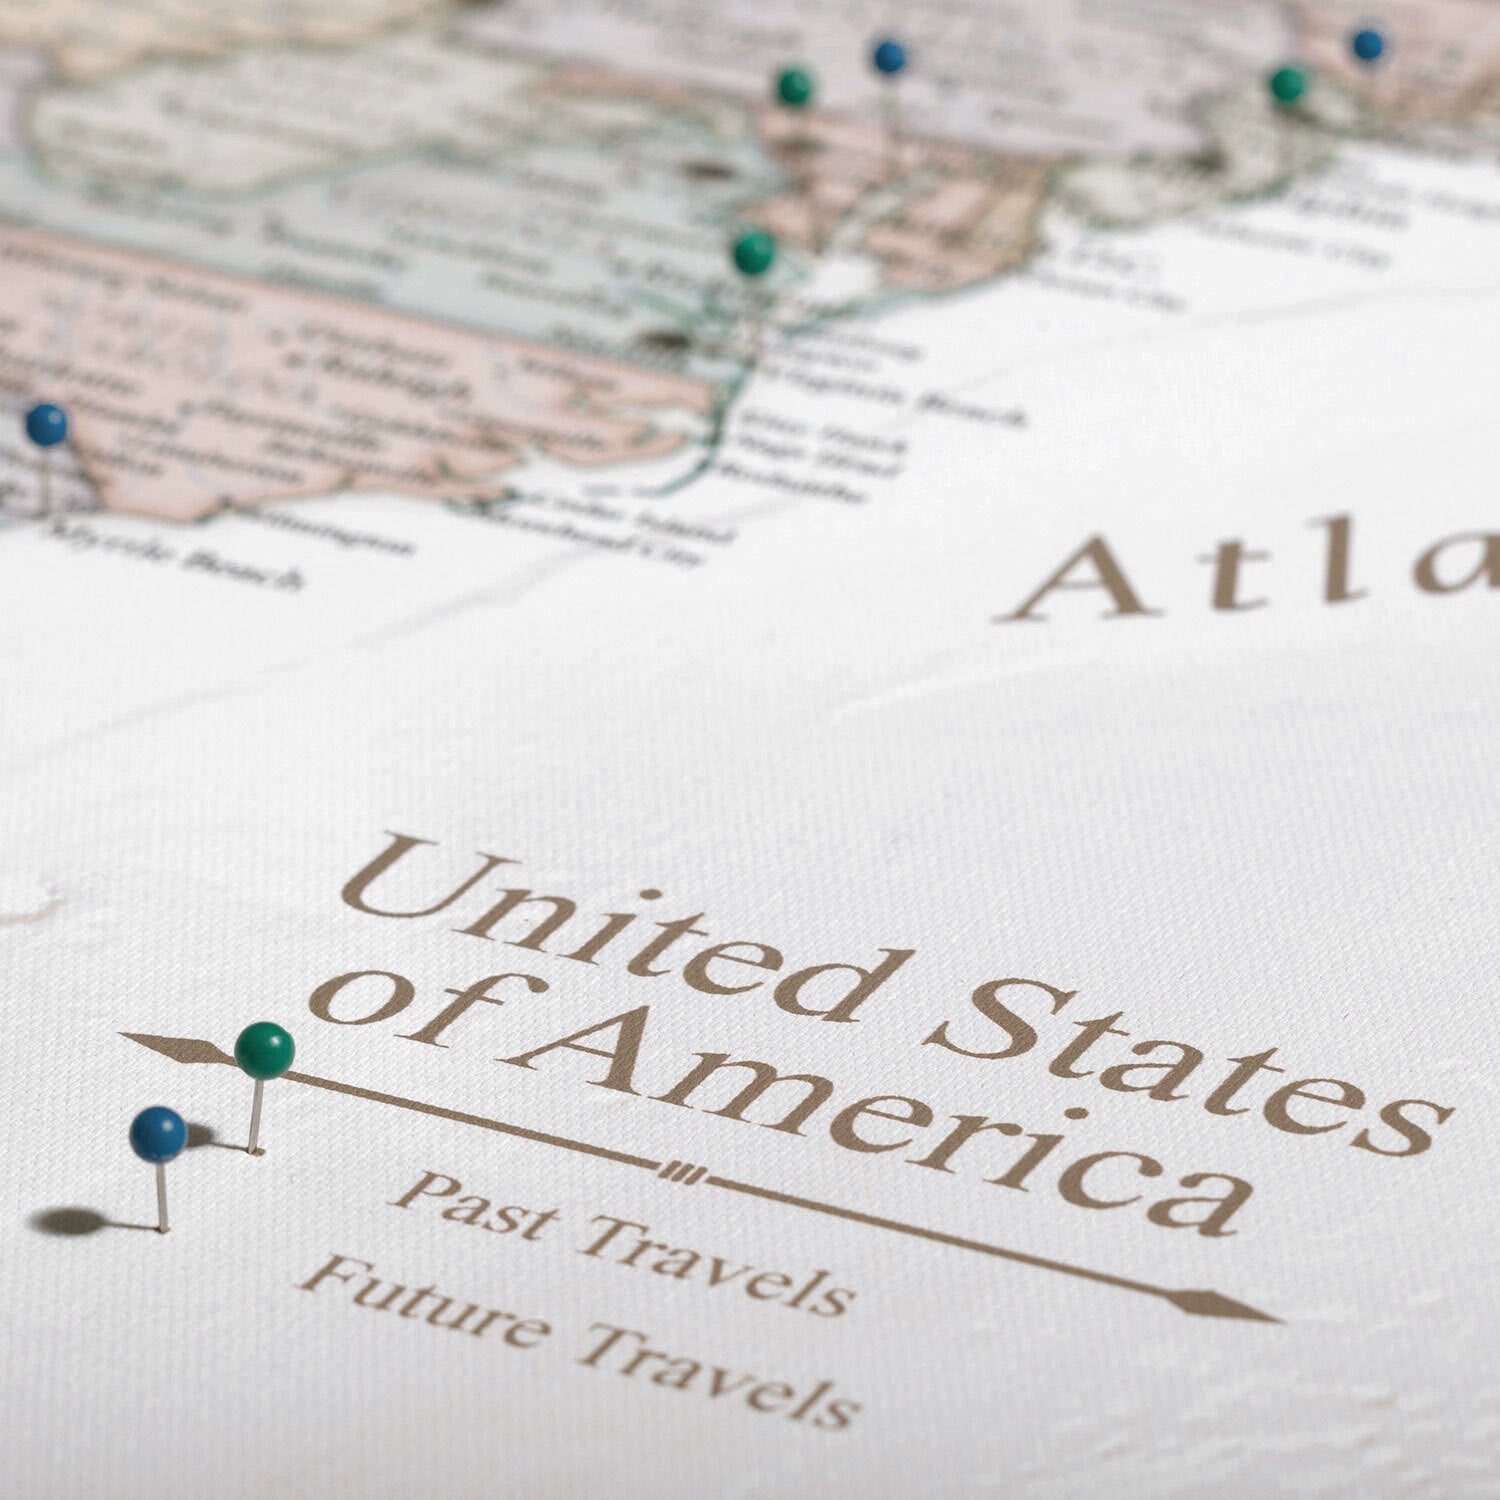 The Trailblazer USA Push Pin Travel Map